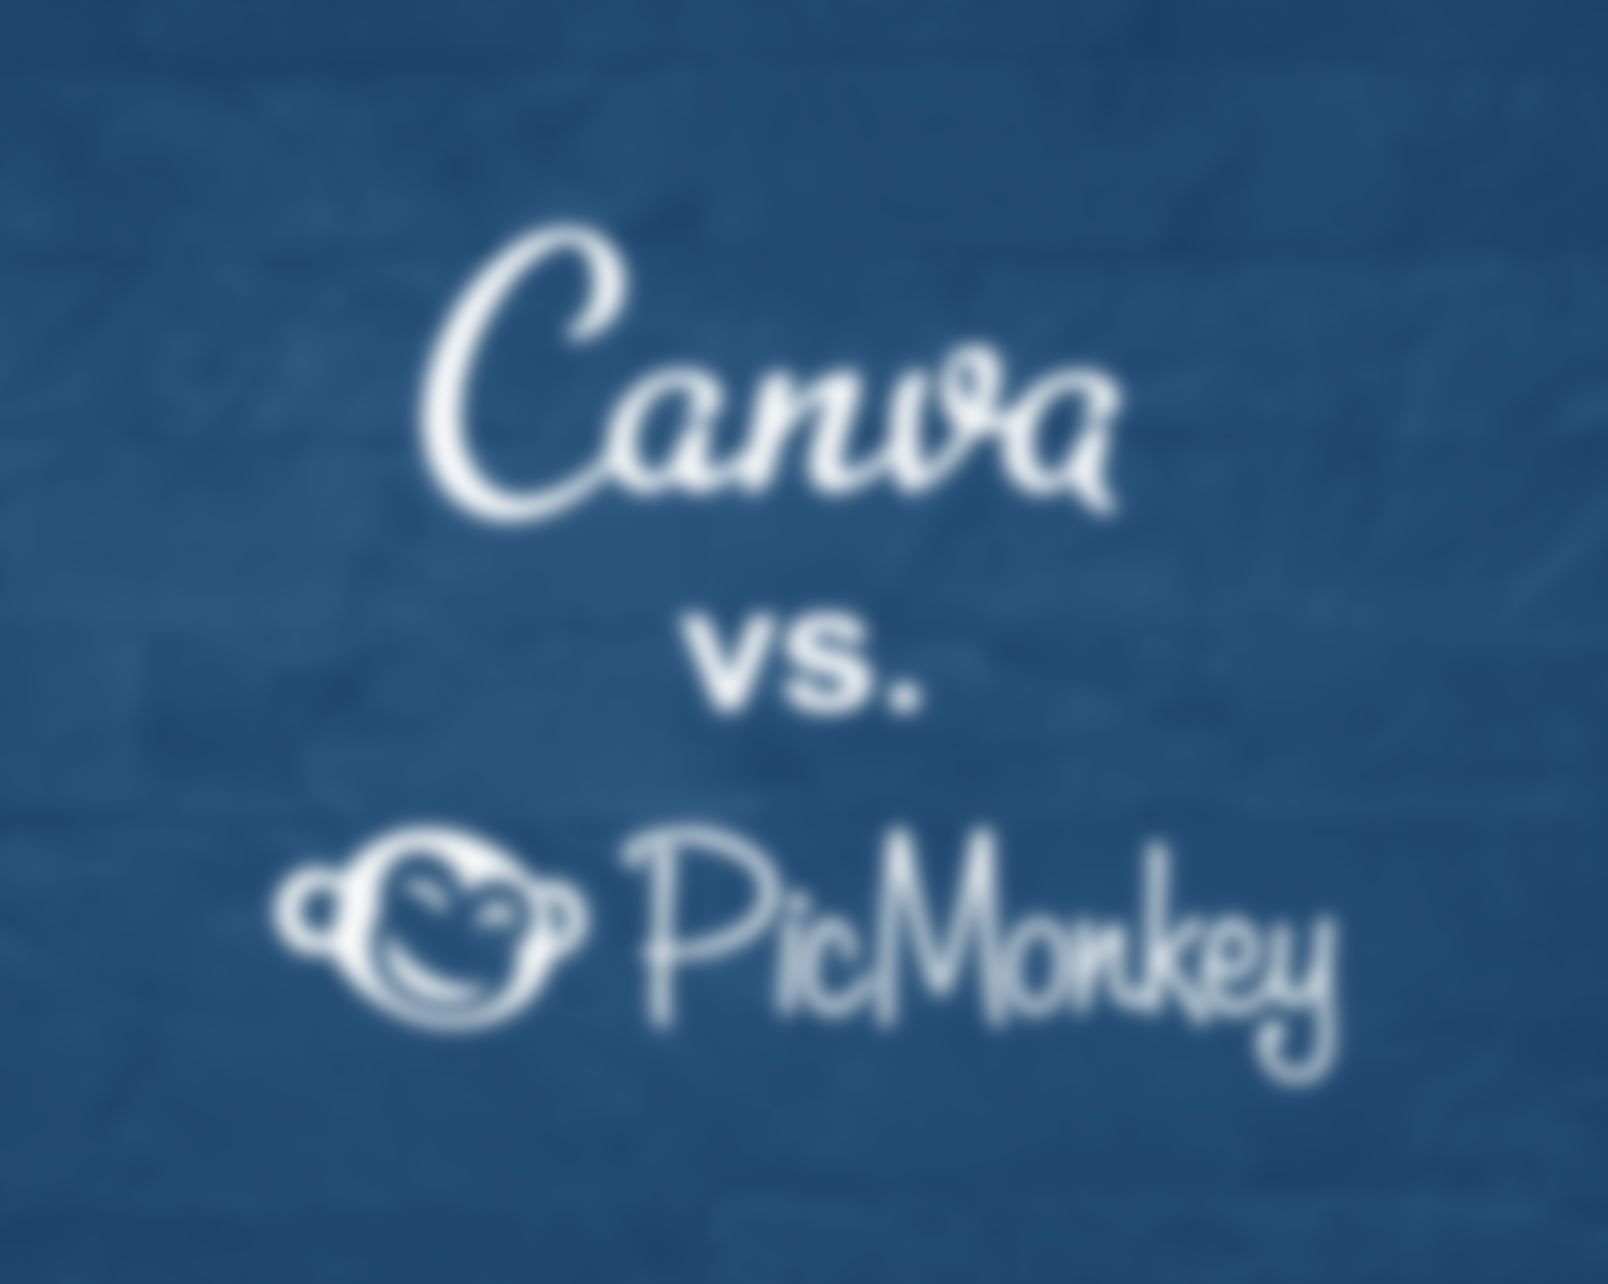 Canva vs. PicMonkey